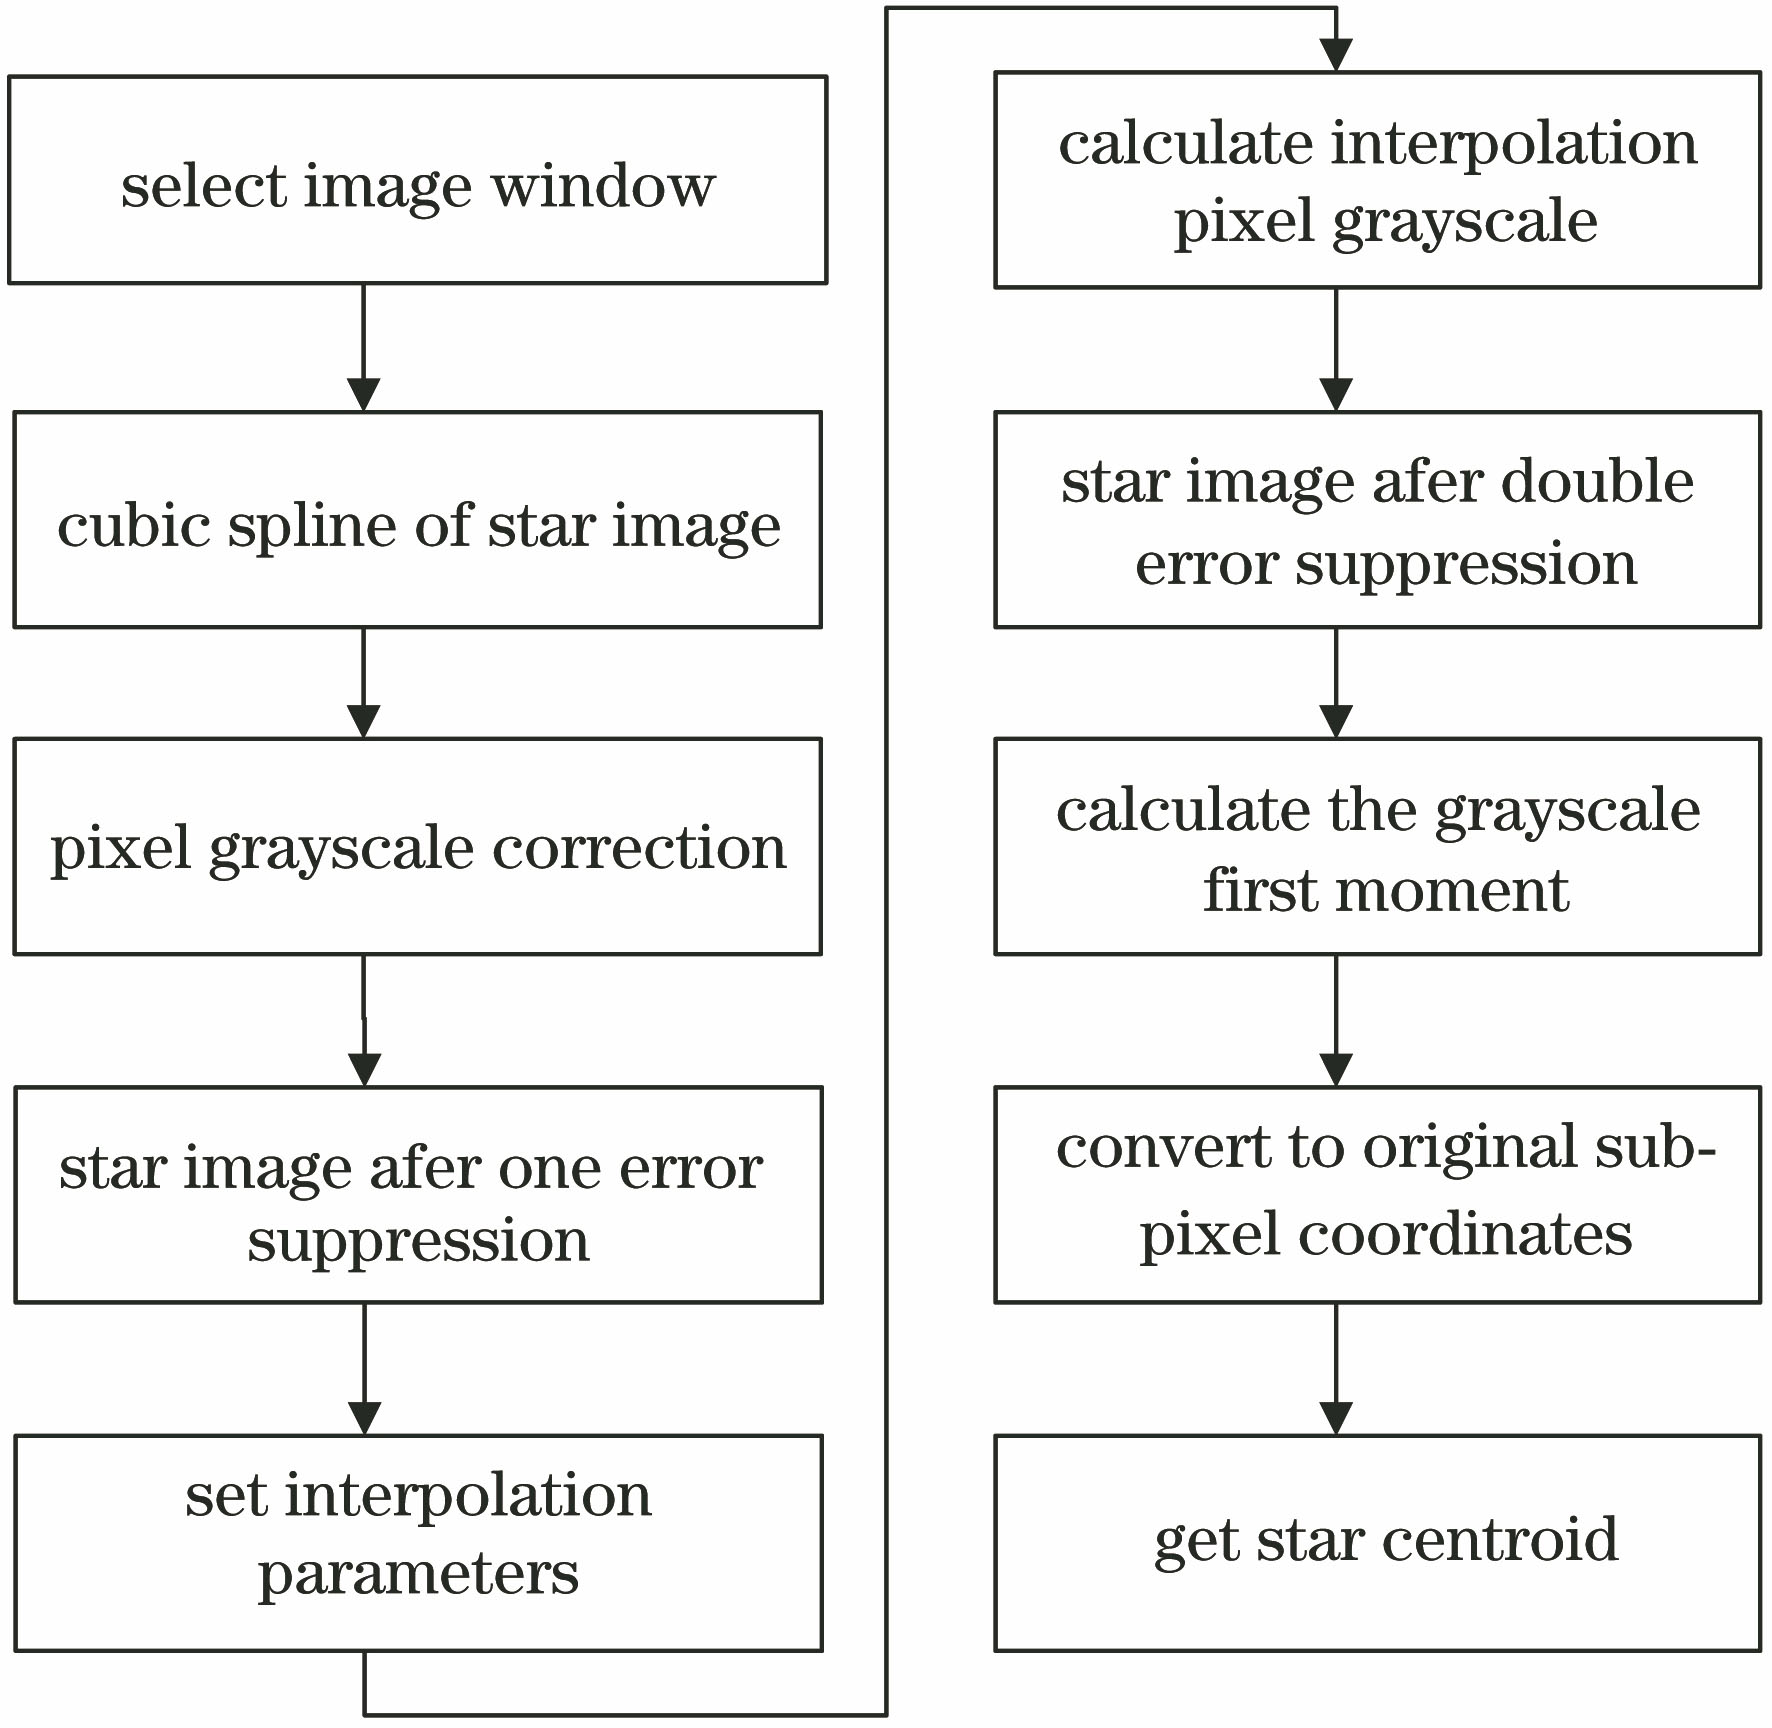 Star centroid location algorithm based on double error suppression